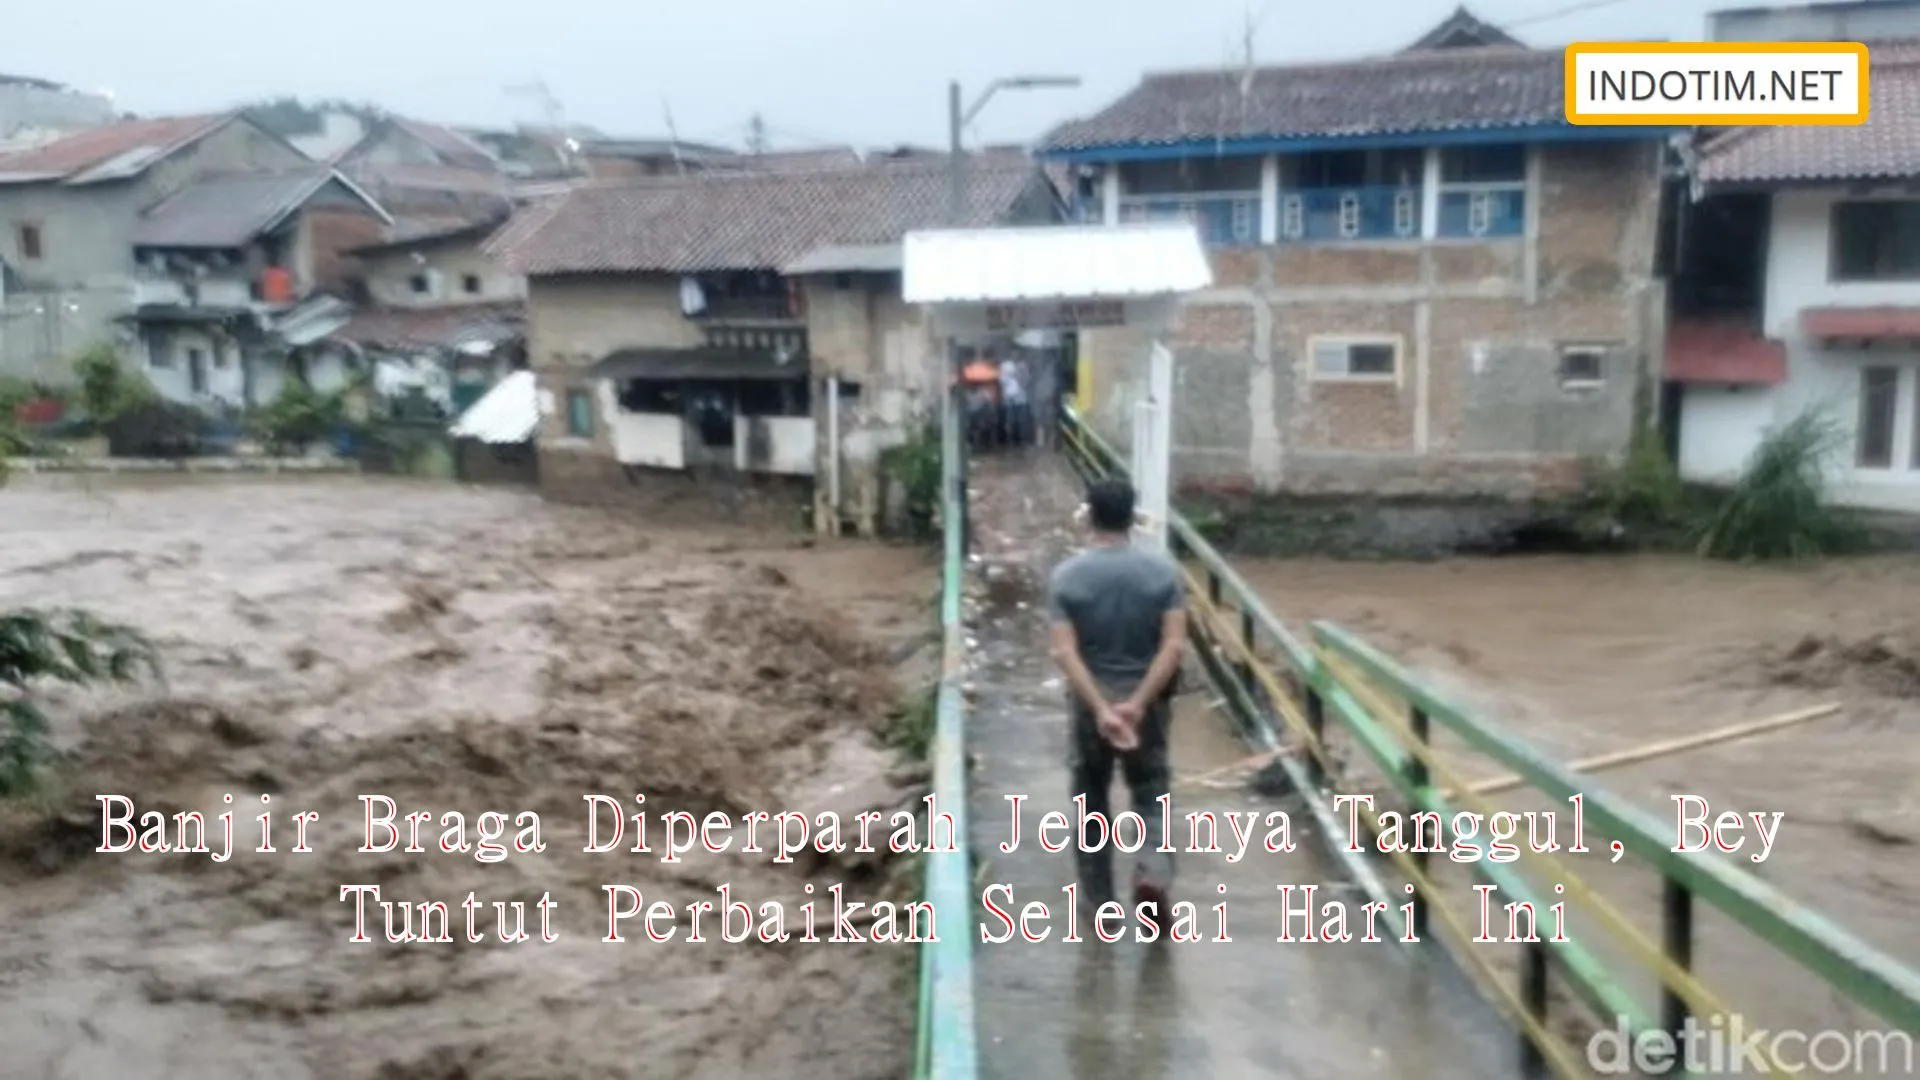 Banjir Braga Diperparah Jebolnya Tanggul, Bey Tuntut Perbaikan Selesai Hari Ini